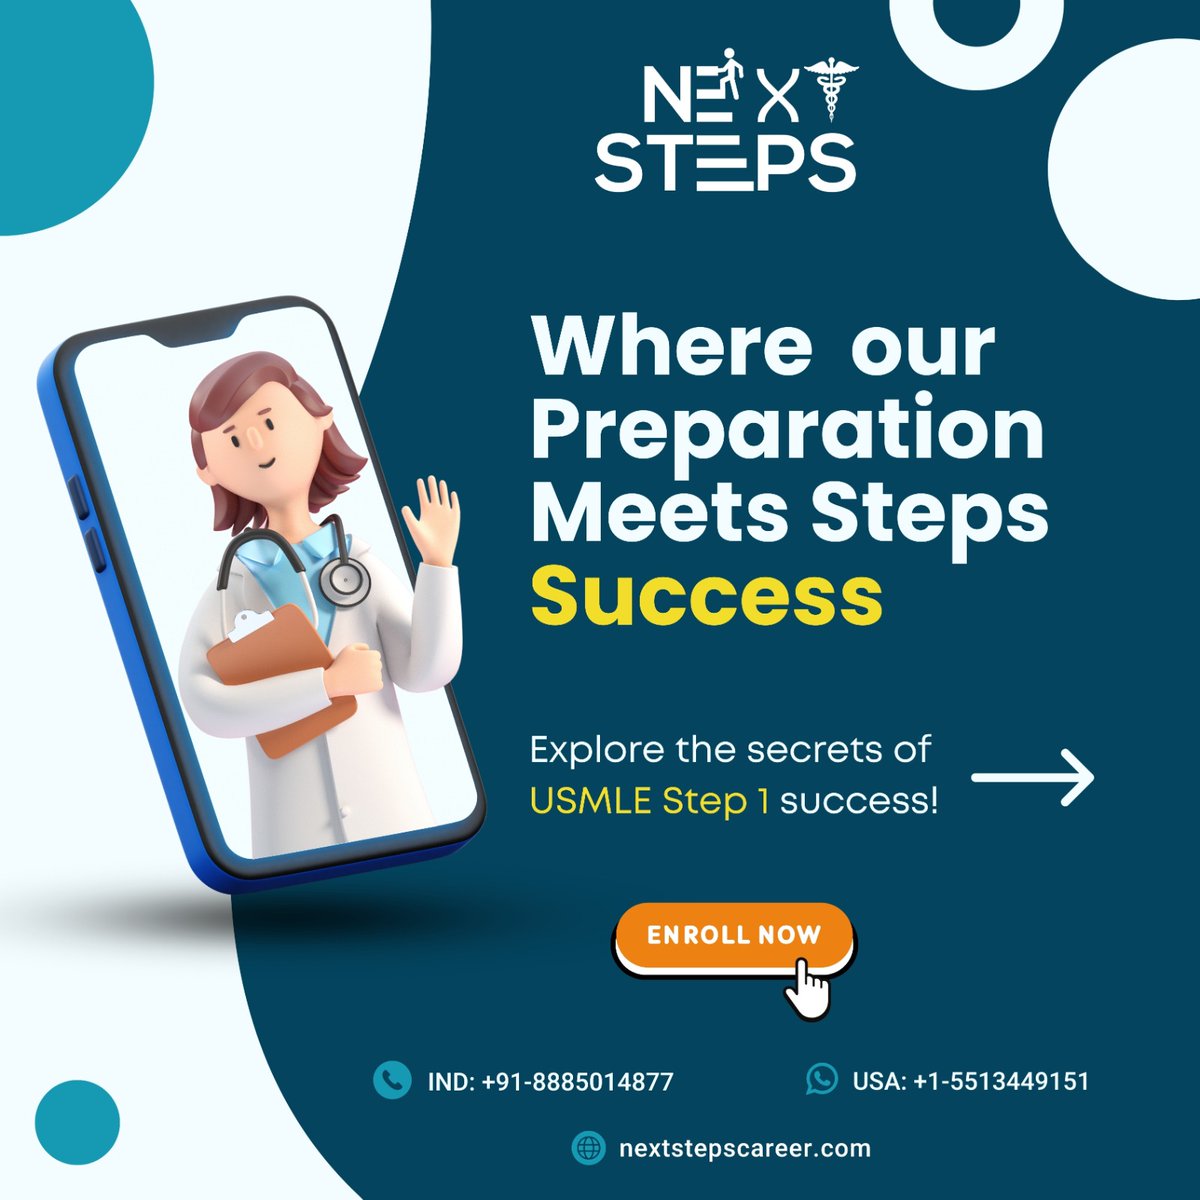 Unlock the secrets of USMLE Step 1 success and pave your path to medical greatness! 🚀
Enroll Now : nextstepscareer.com/usmle-preparat…

#nextstepsusmle #Step1 #step2ck #usmle #usmlepreparation #usmlePrep #nextsteps #nextstepsusmle #NextStepSuccess